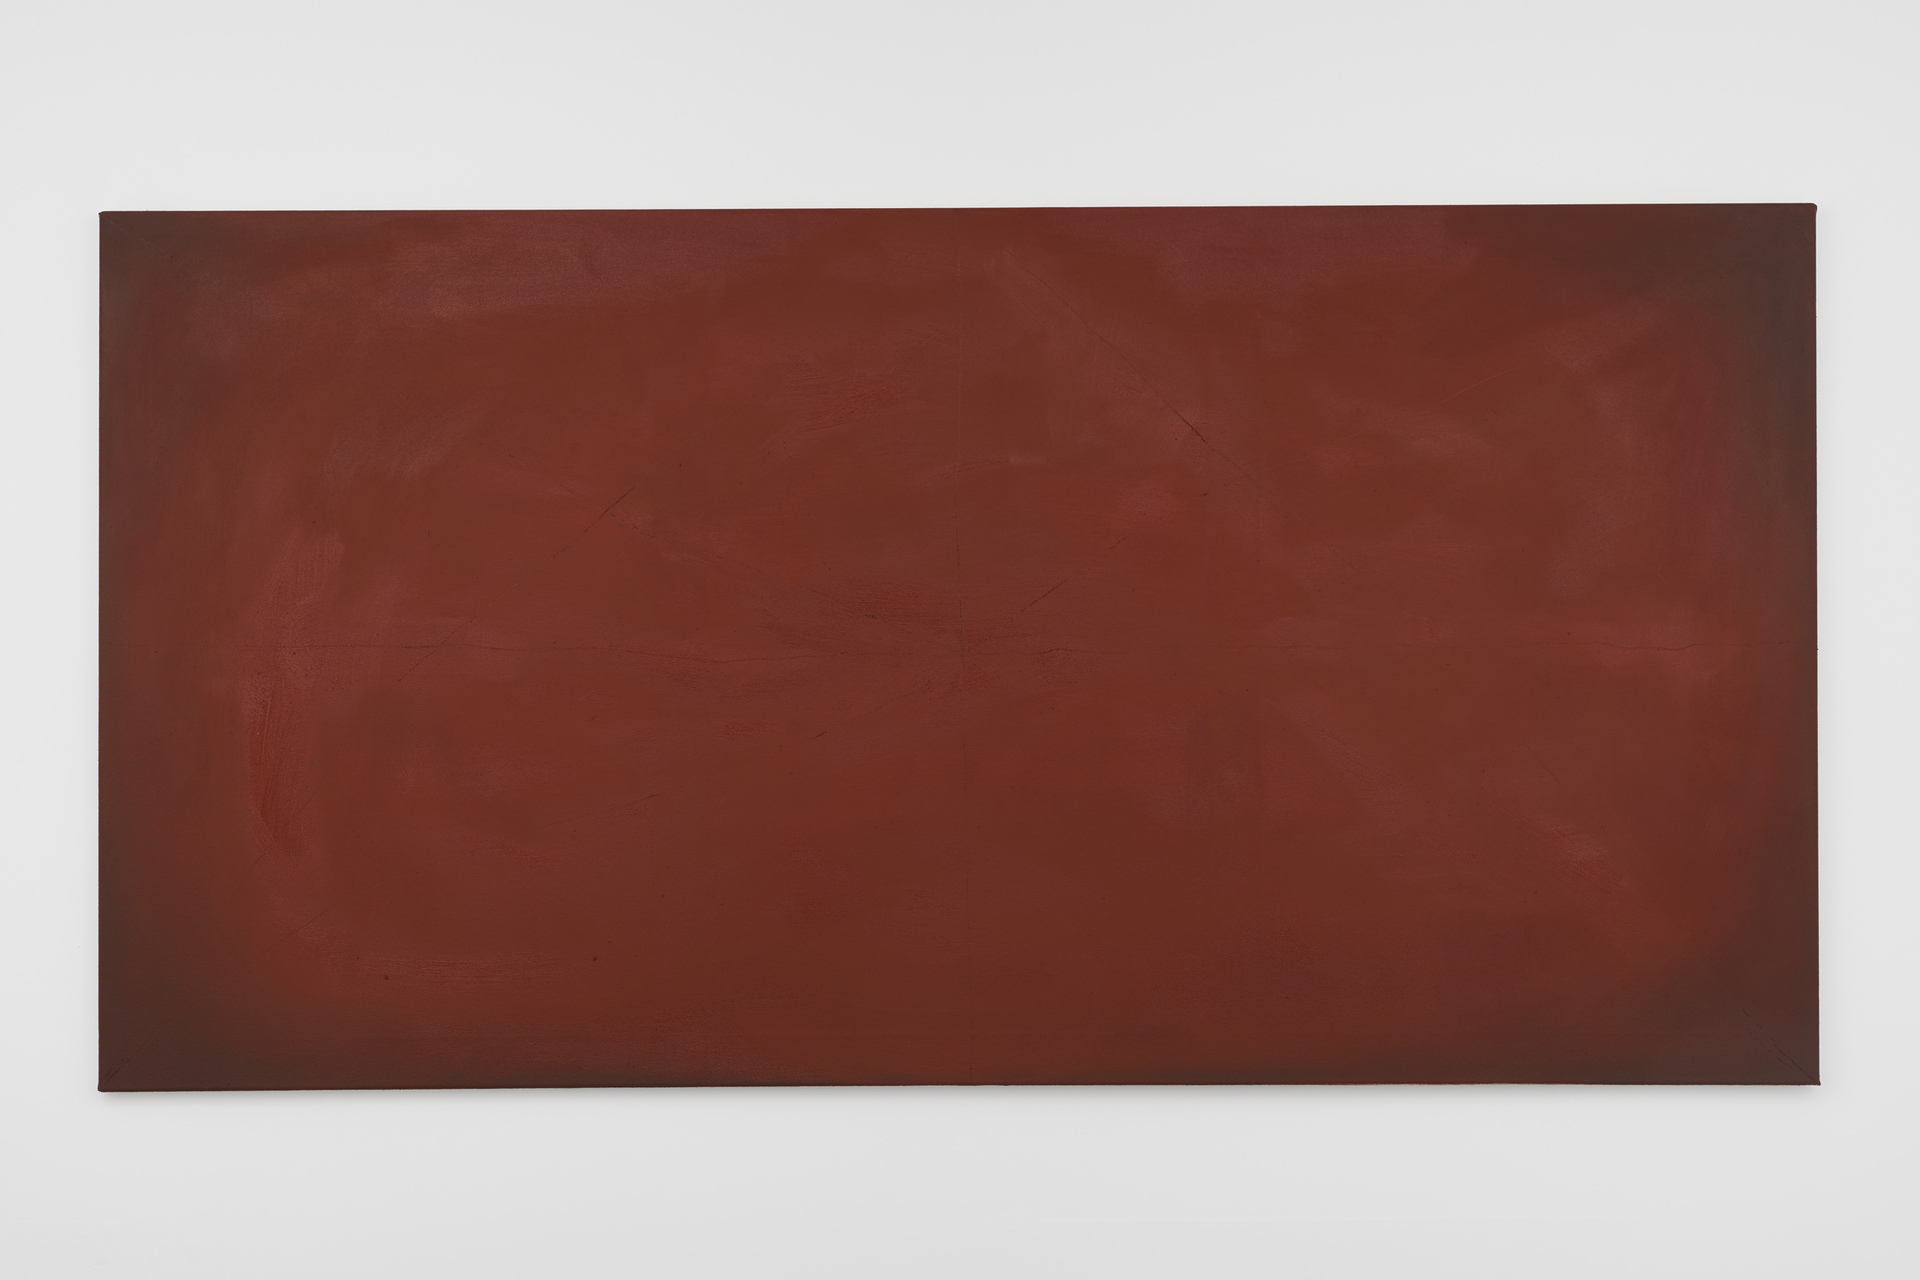 Rhea Dillon, Vexilla Maurus, 2021, Oil on canvas, 206 x 106 cm